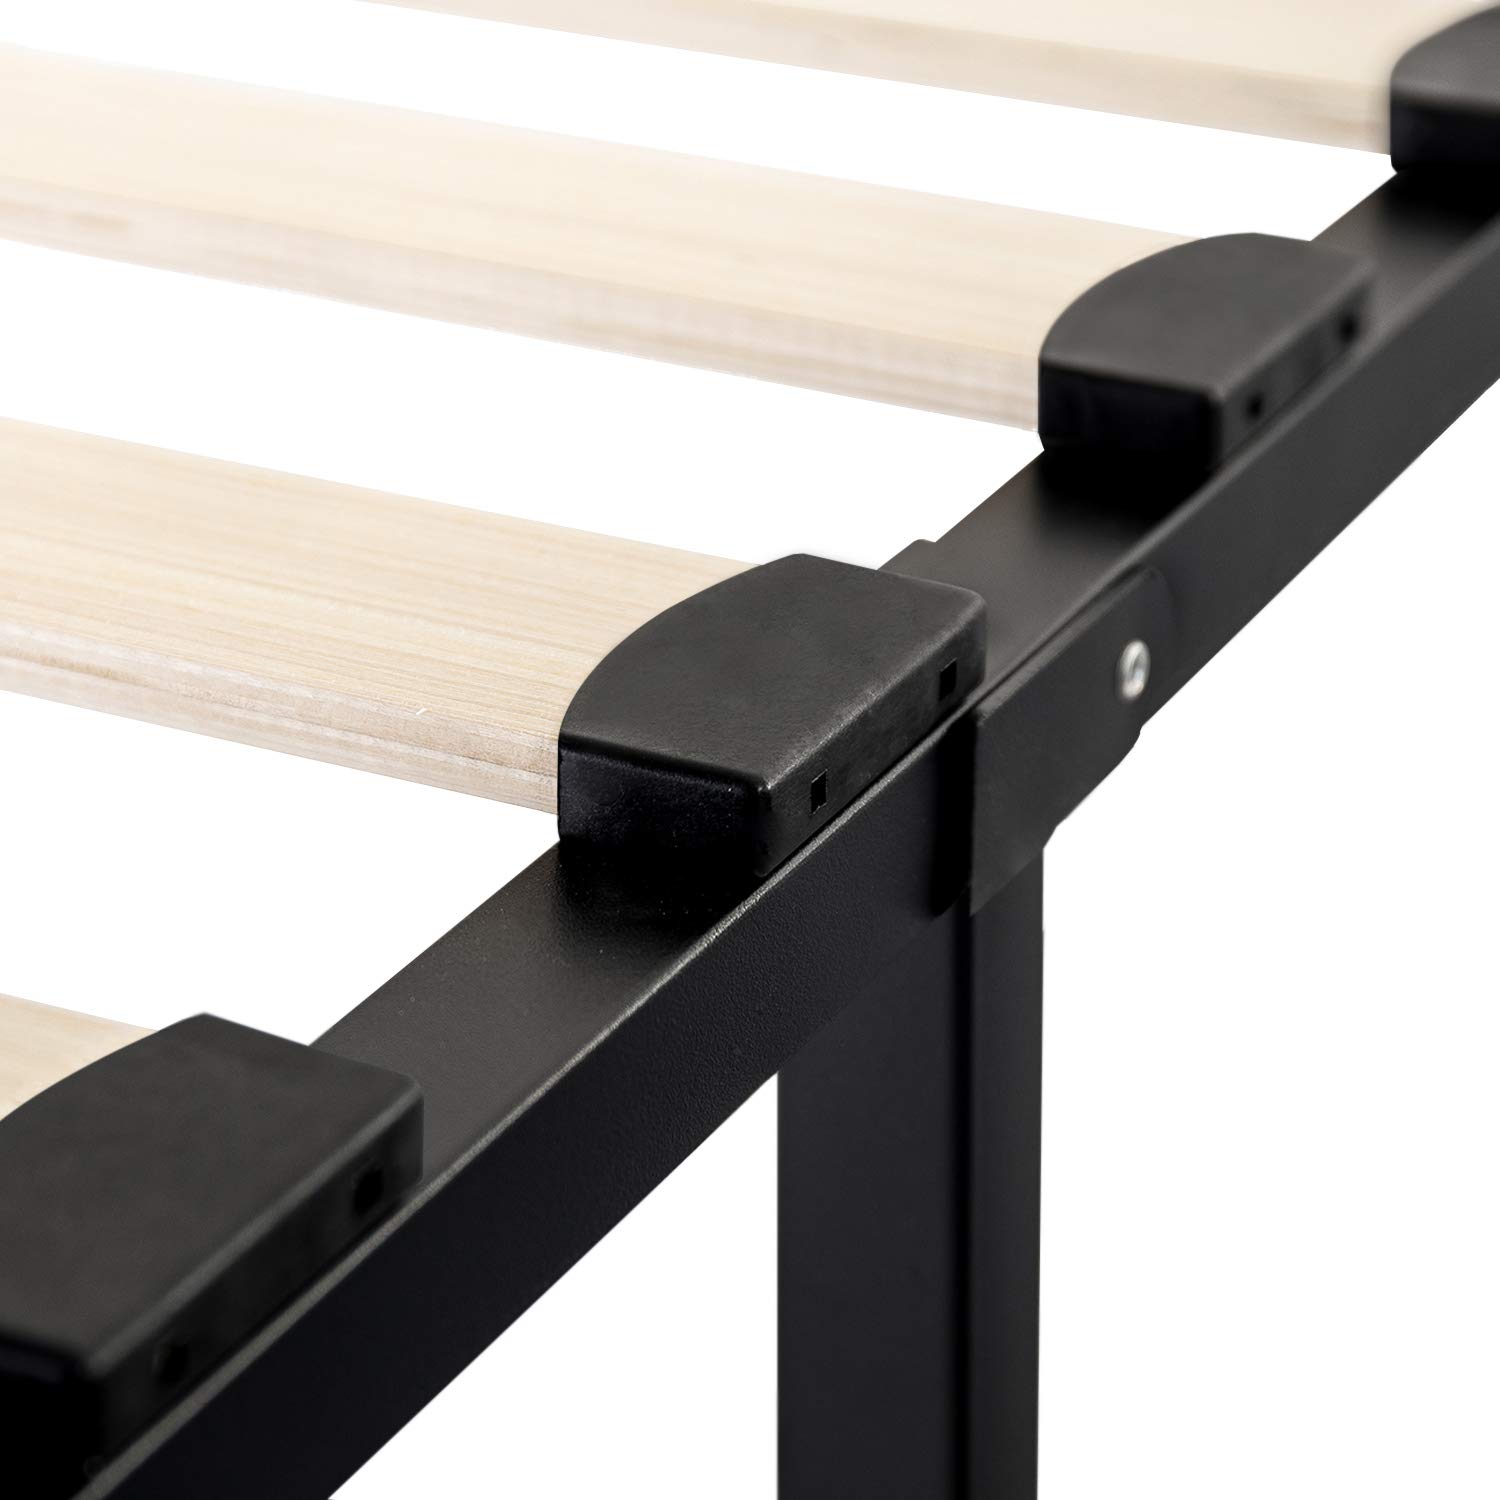 Best Price Mattress Full Bed Frame-14 Inch Metal Platform Beds w/Wooden Slat Mattress Foundation (No Box Spring Needed), Black